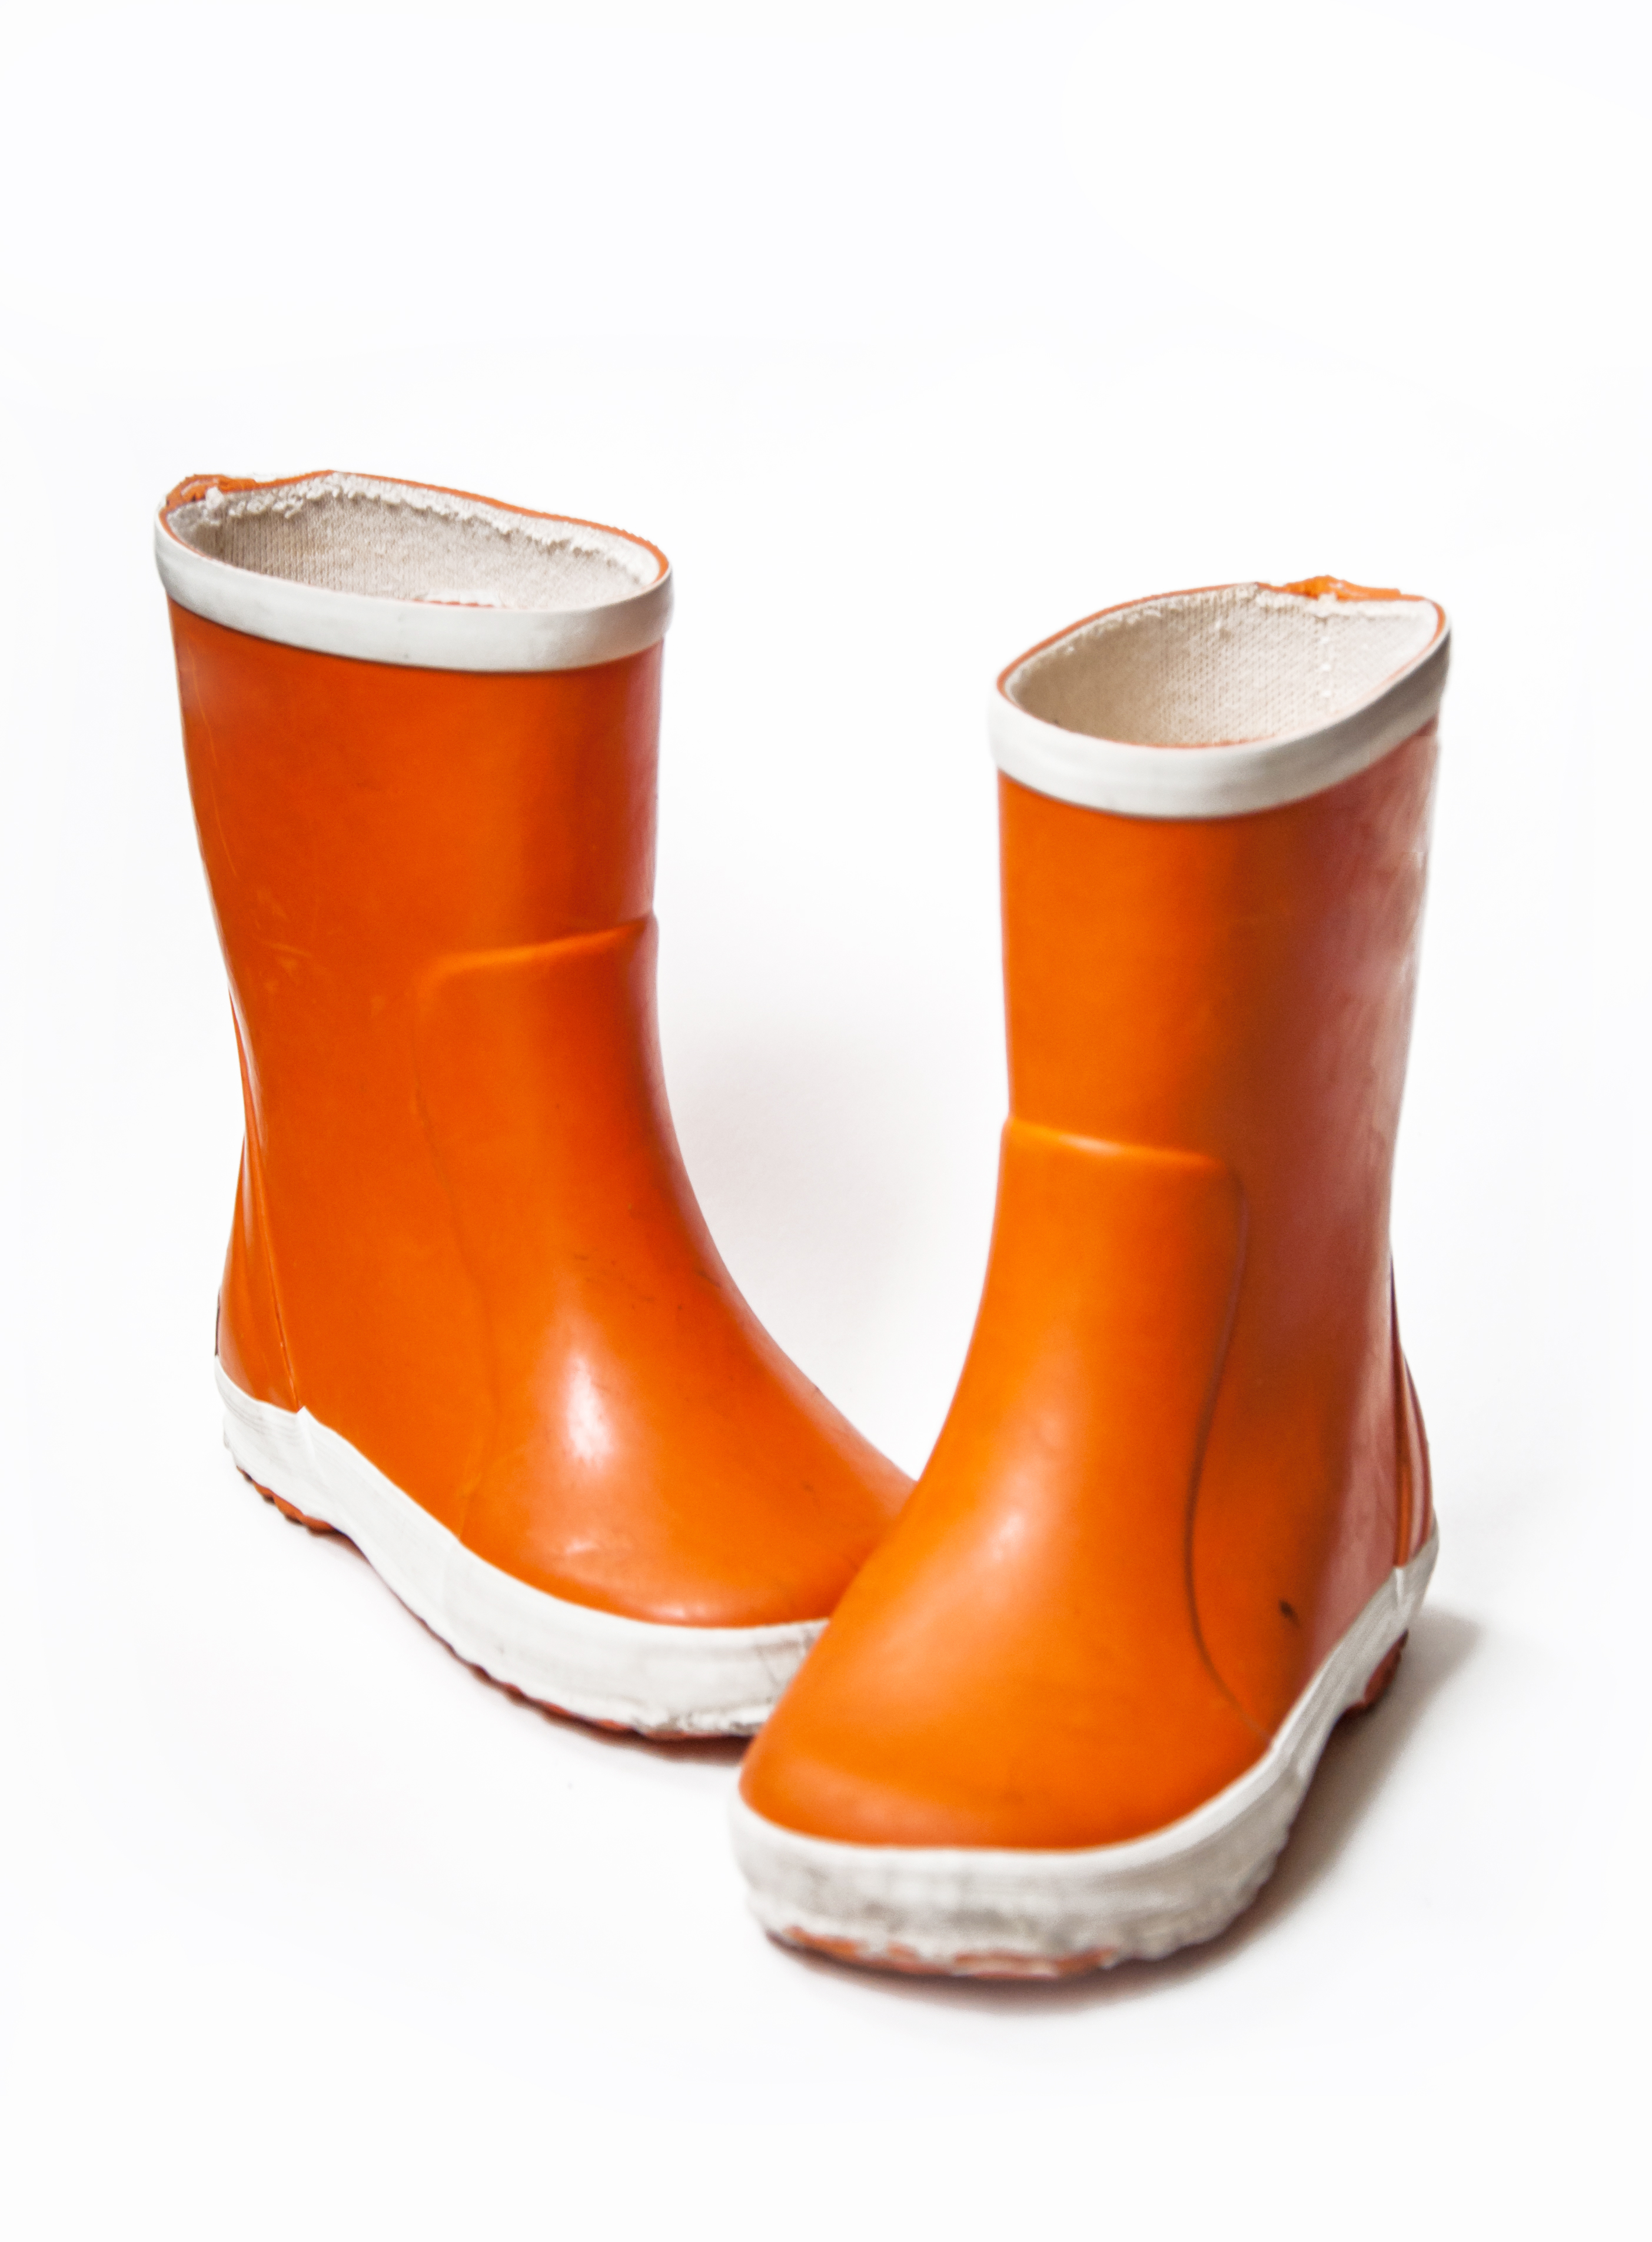 Free photo: Orange children`s rain boots - Accessory, Splashing, Puddle ...